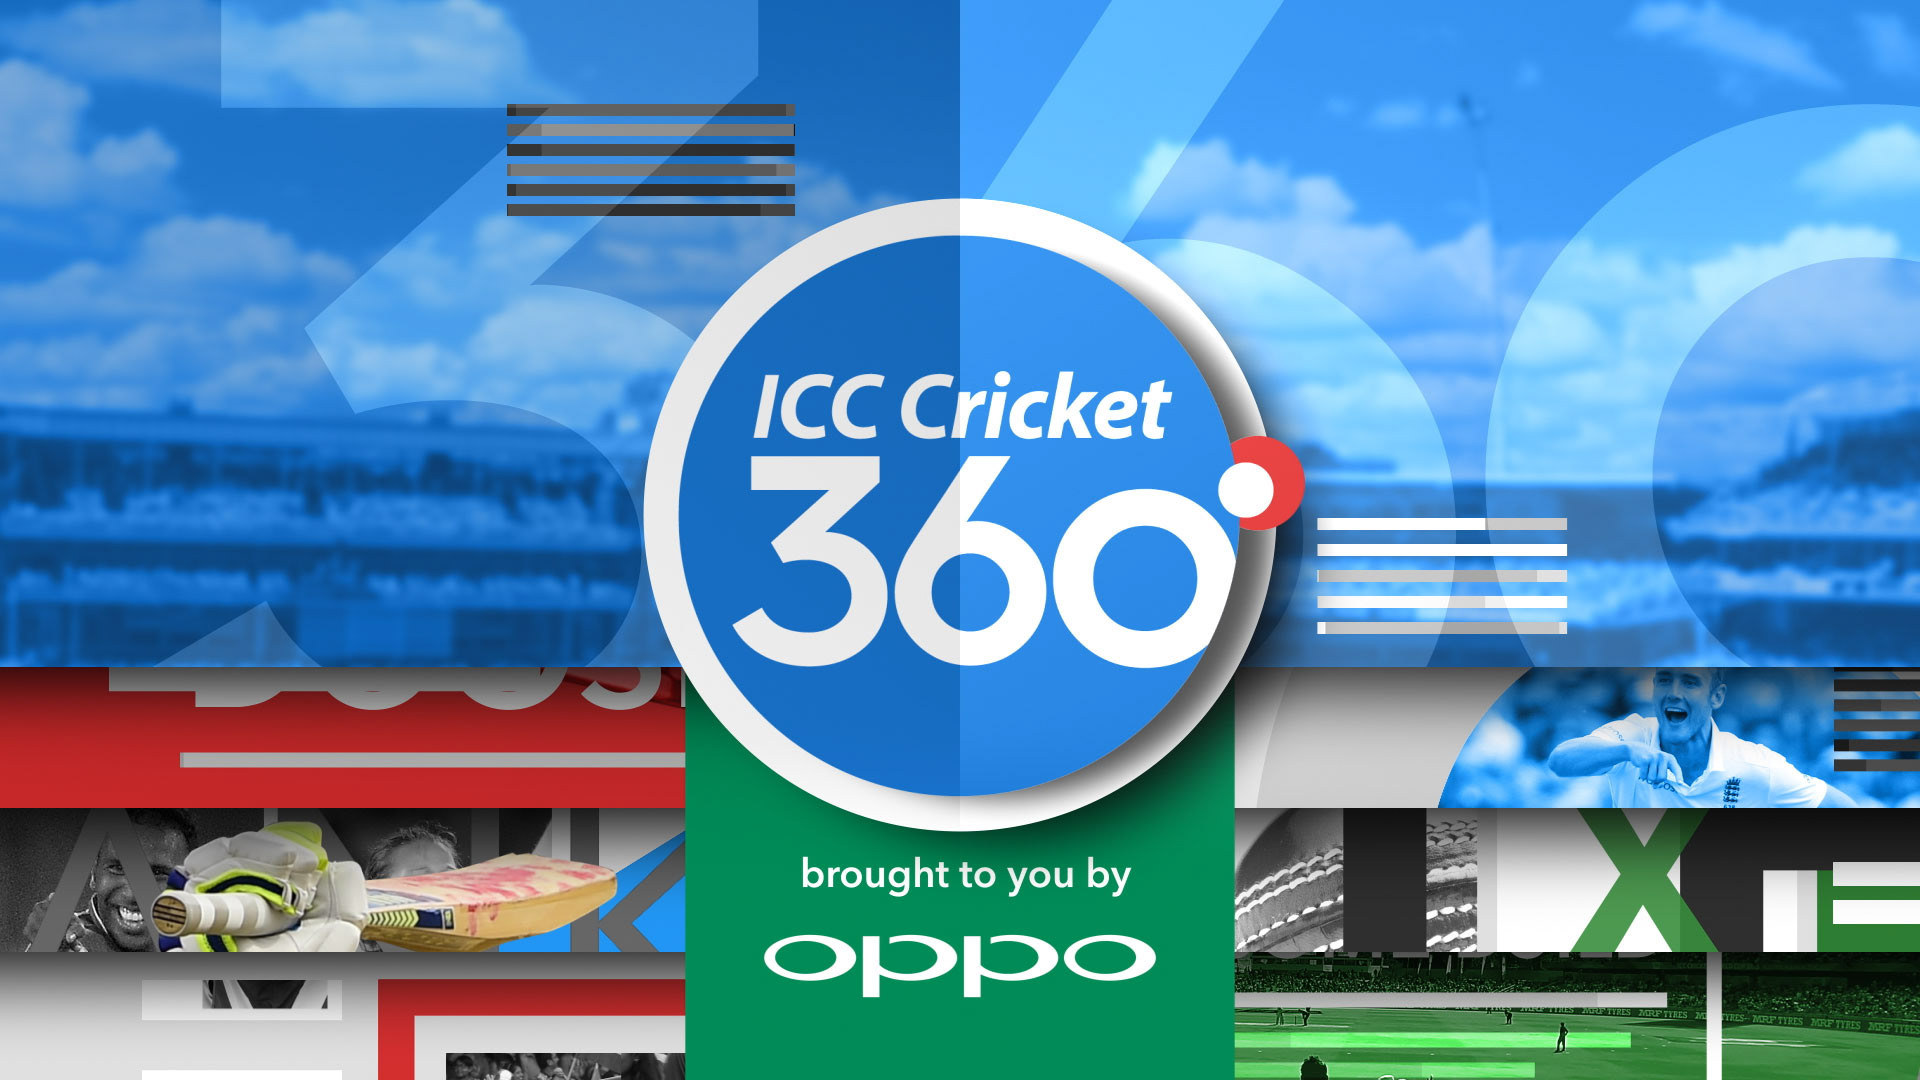 Mark Garratt - ICC Cricket 360°